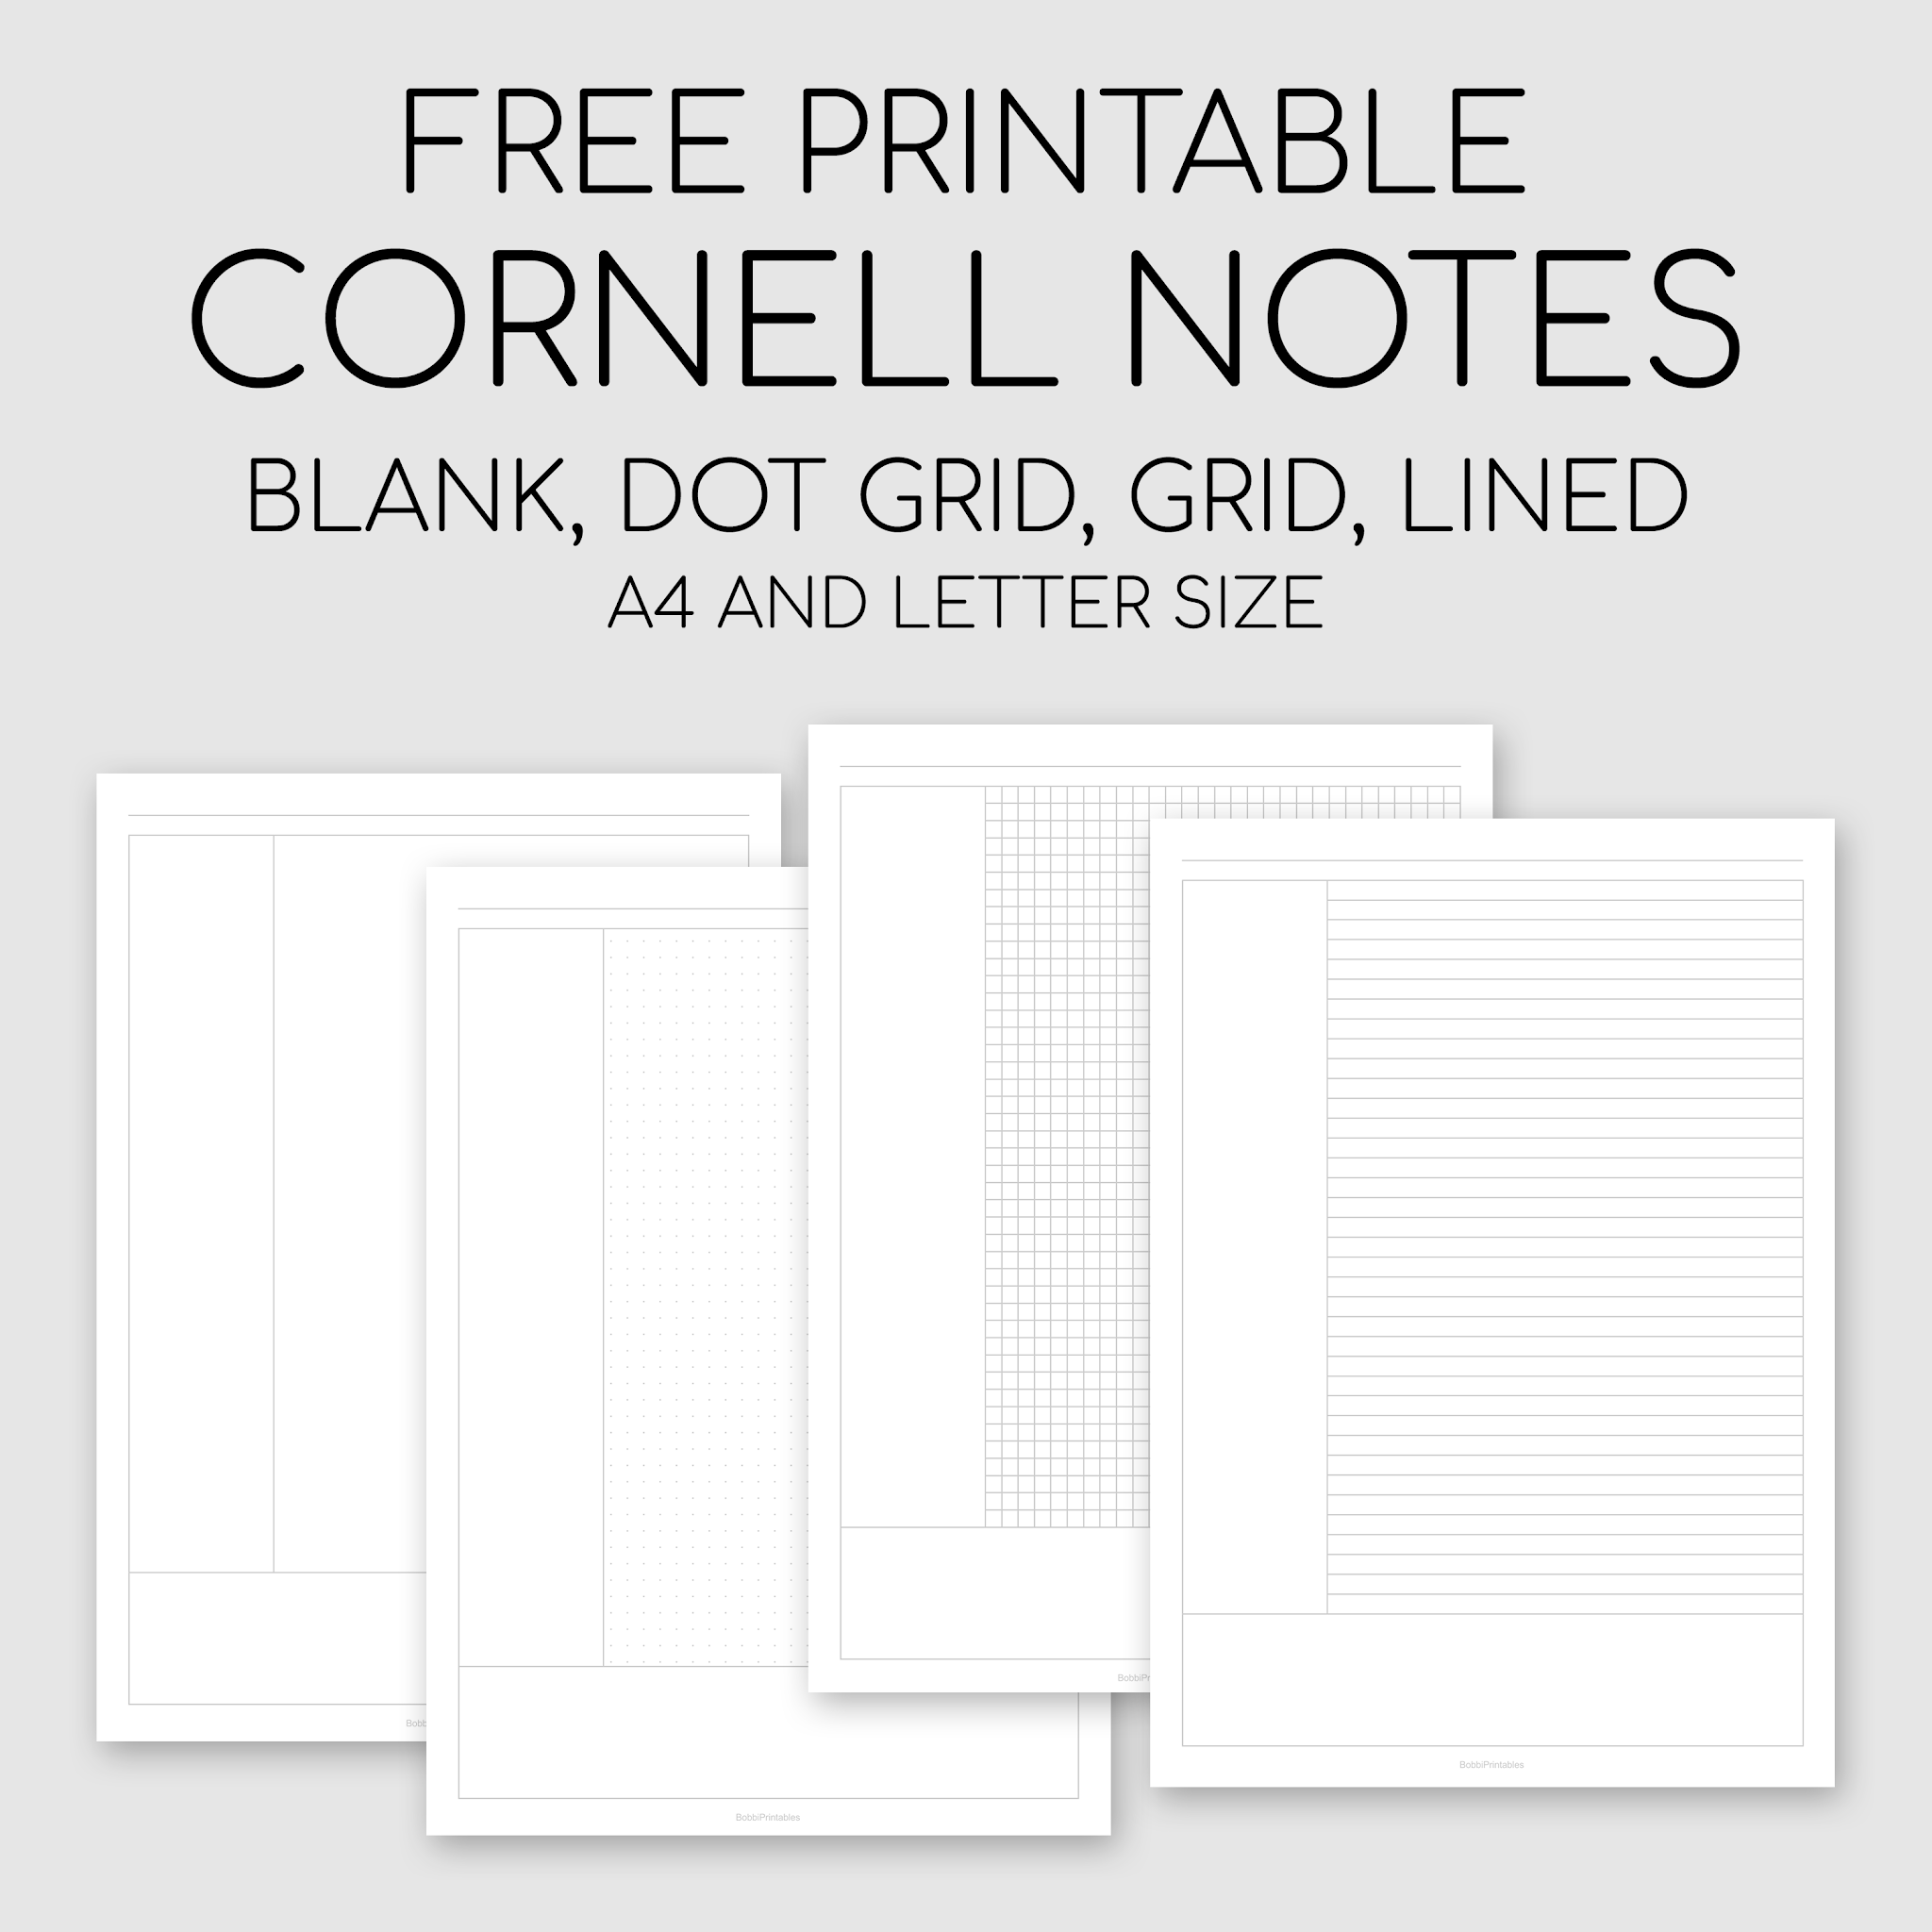 Printable Legal Size Paper Templates